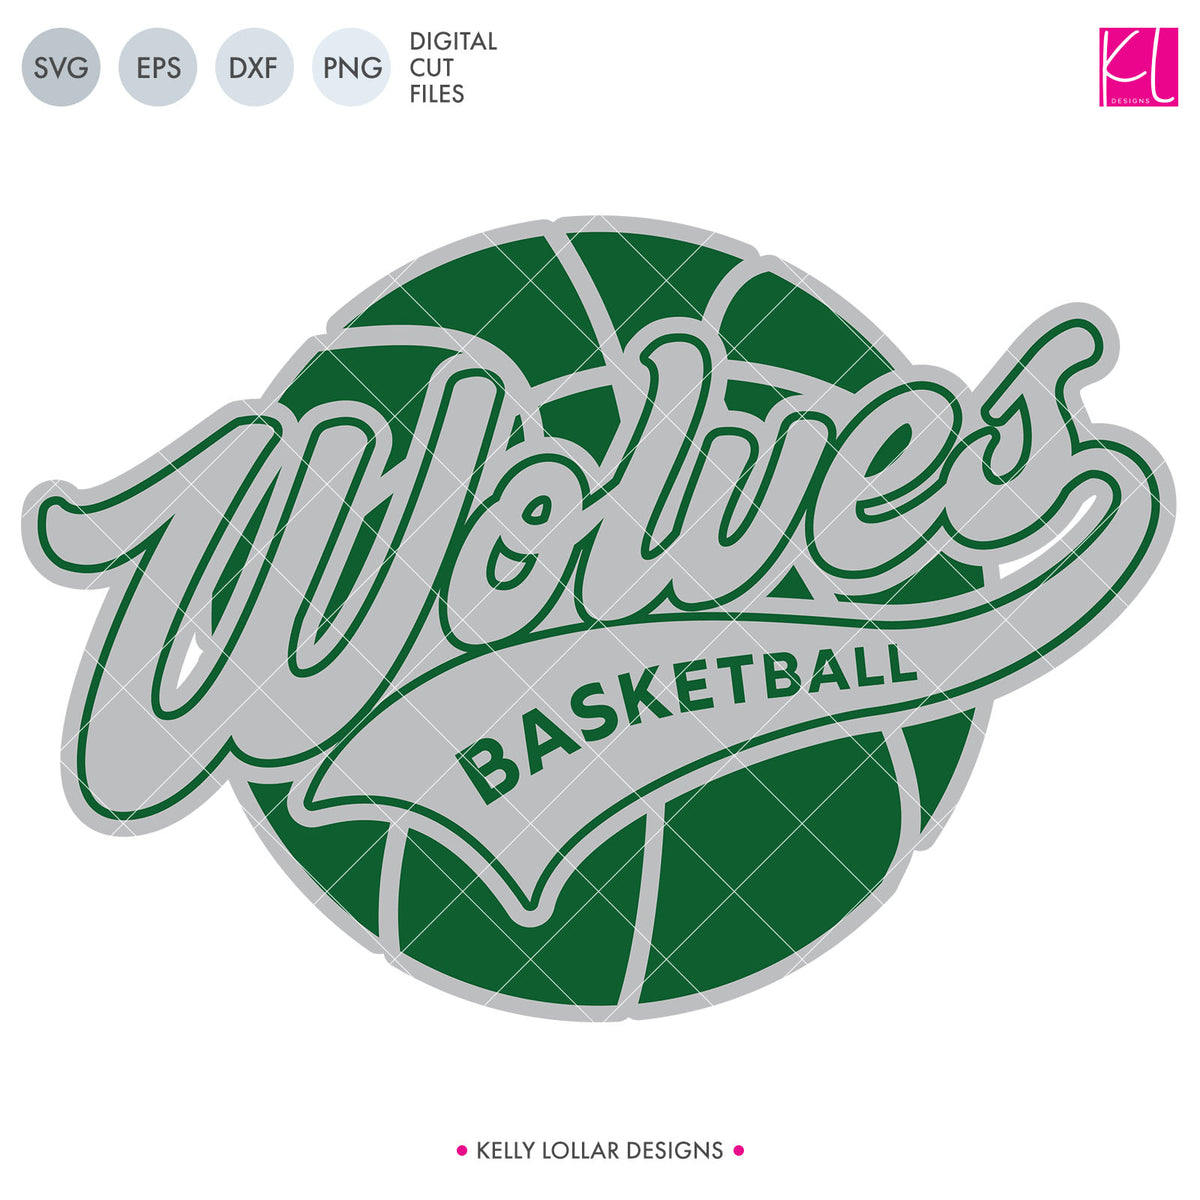 Wolves Basketball Bundle | SVG DXF EPS PNG Cut Files